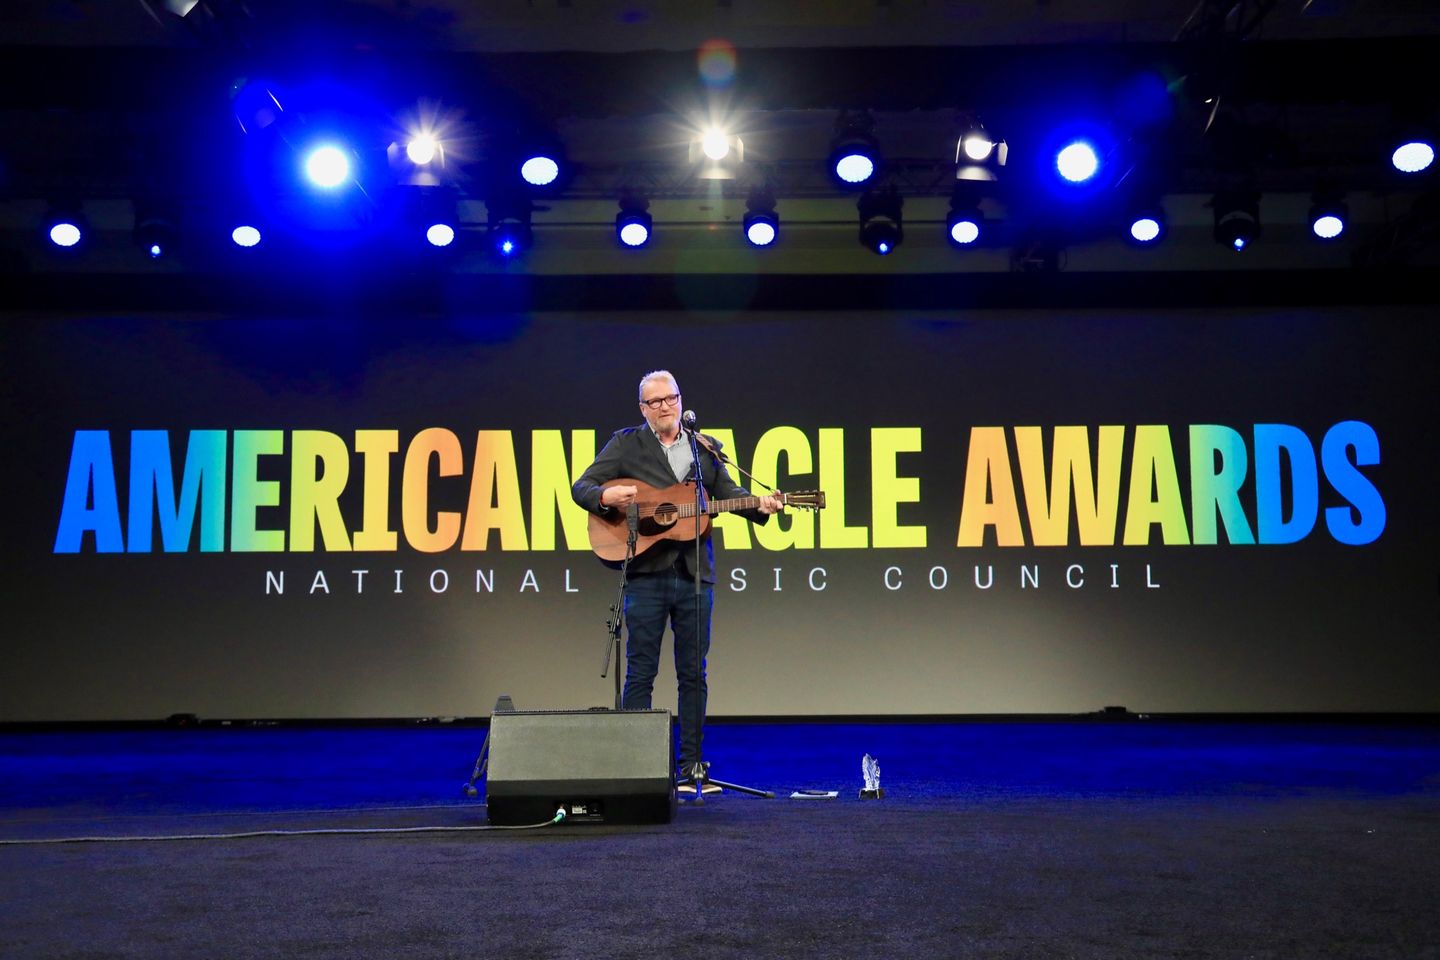 American eagle awards